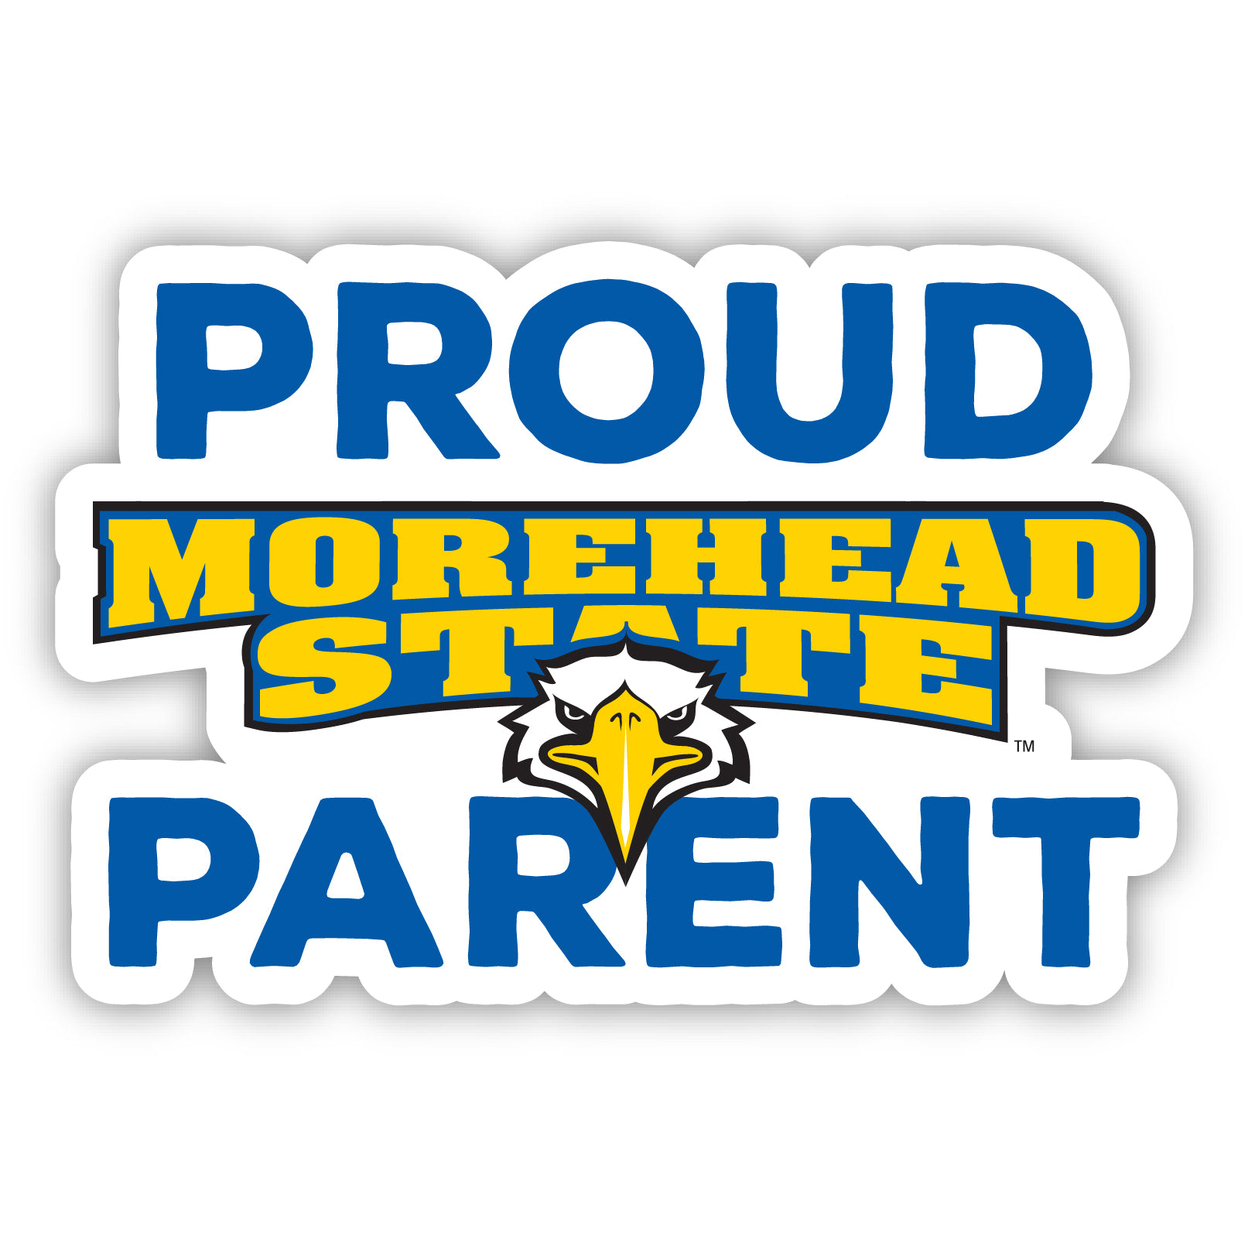 Morehead State University Proud Parent 4 Sticker